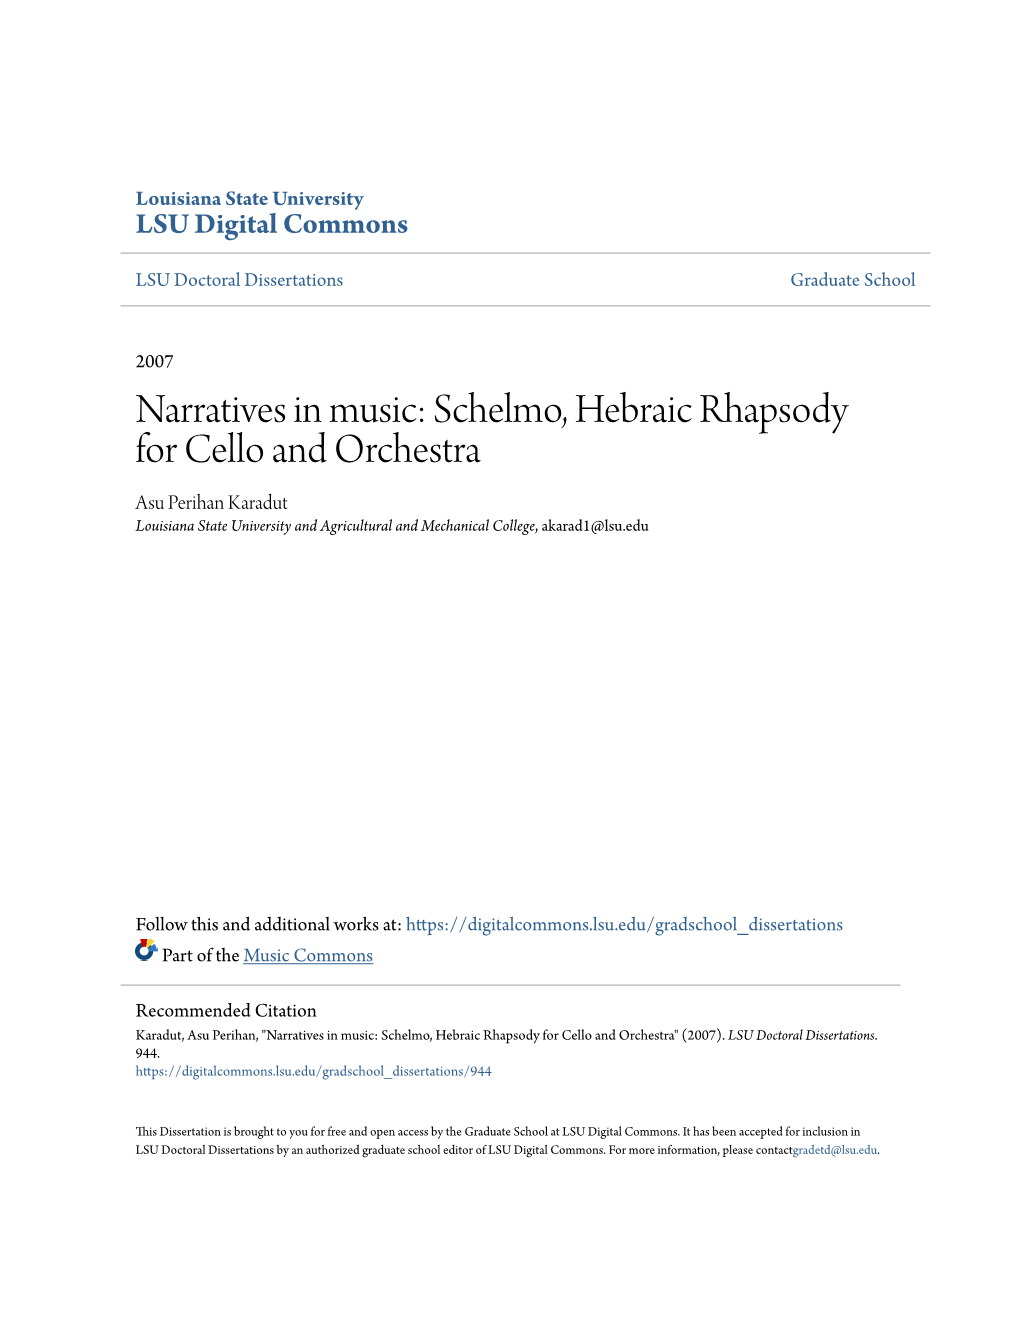 Narratives in Music: Schelmo, Hebraic Rhapsody for Cello and Orchestra